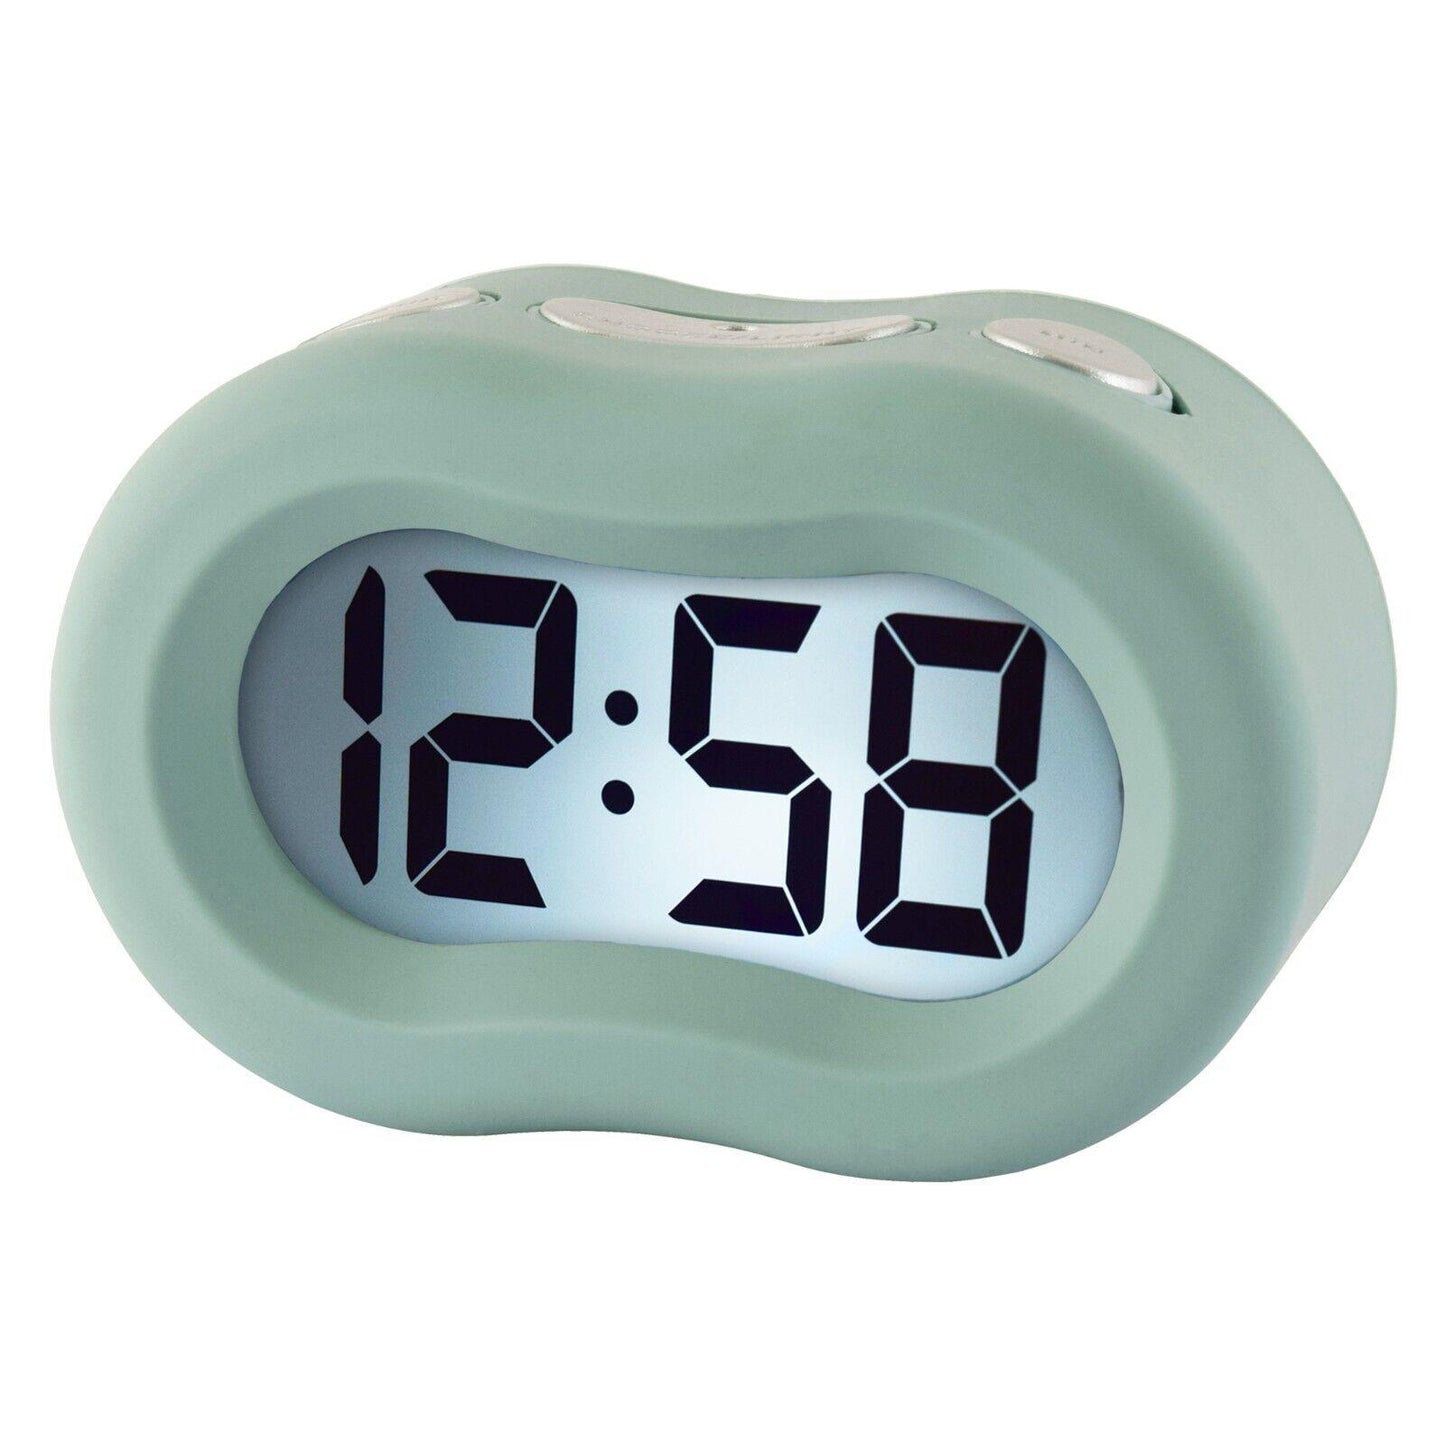 Acctim Vierra Silicon Digital Sage Alarm Clock 15118